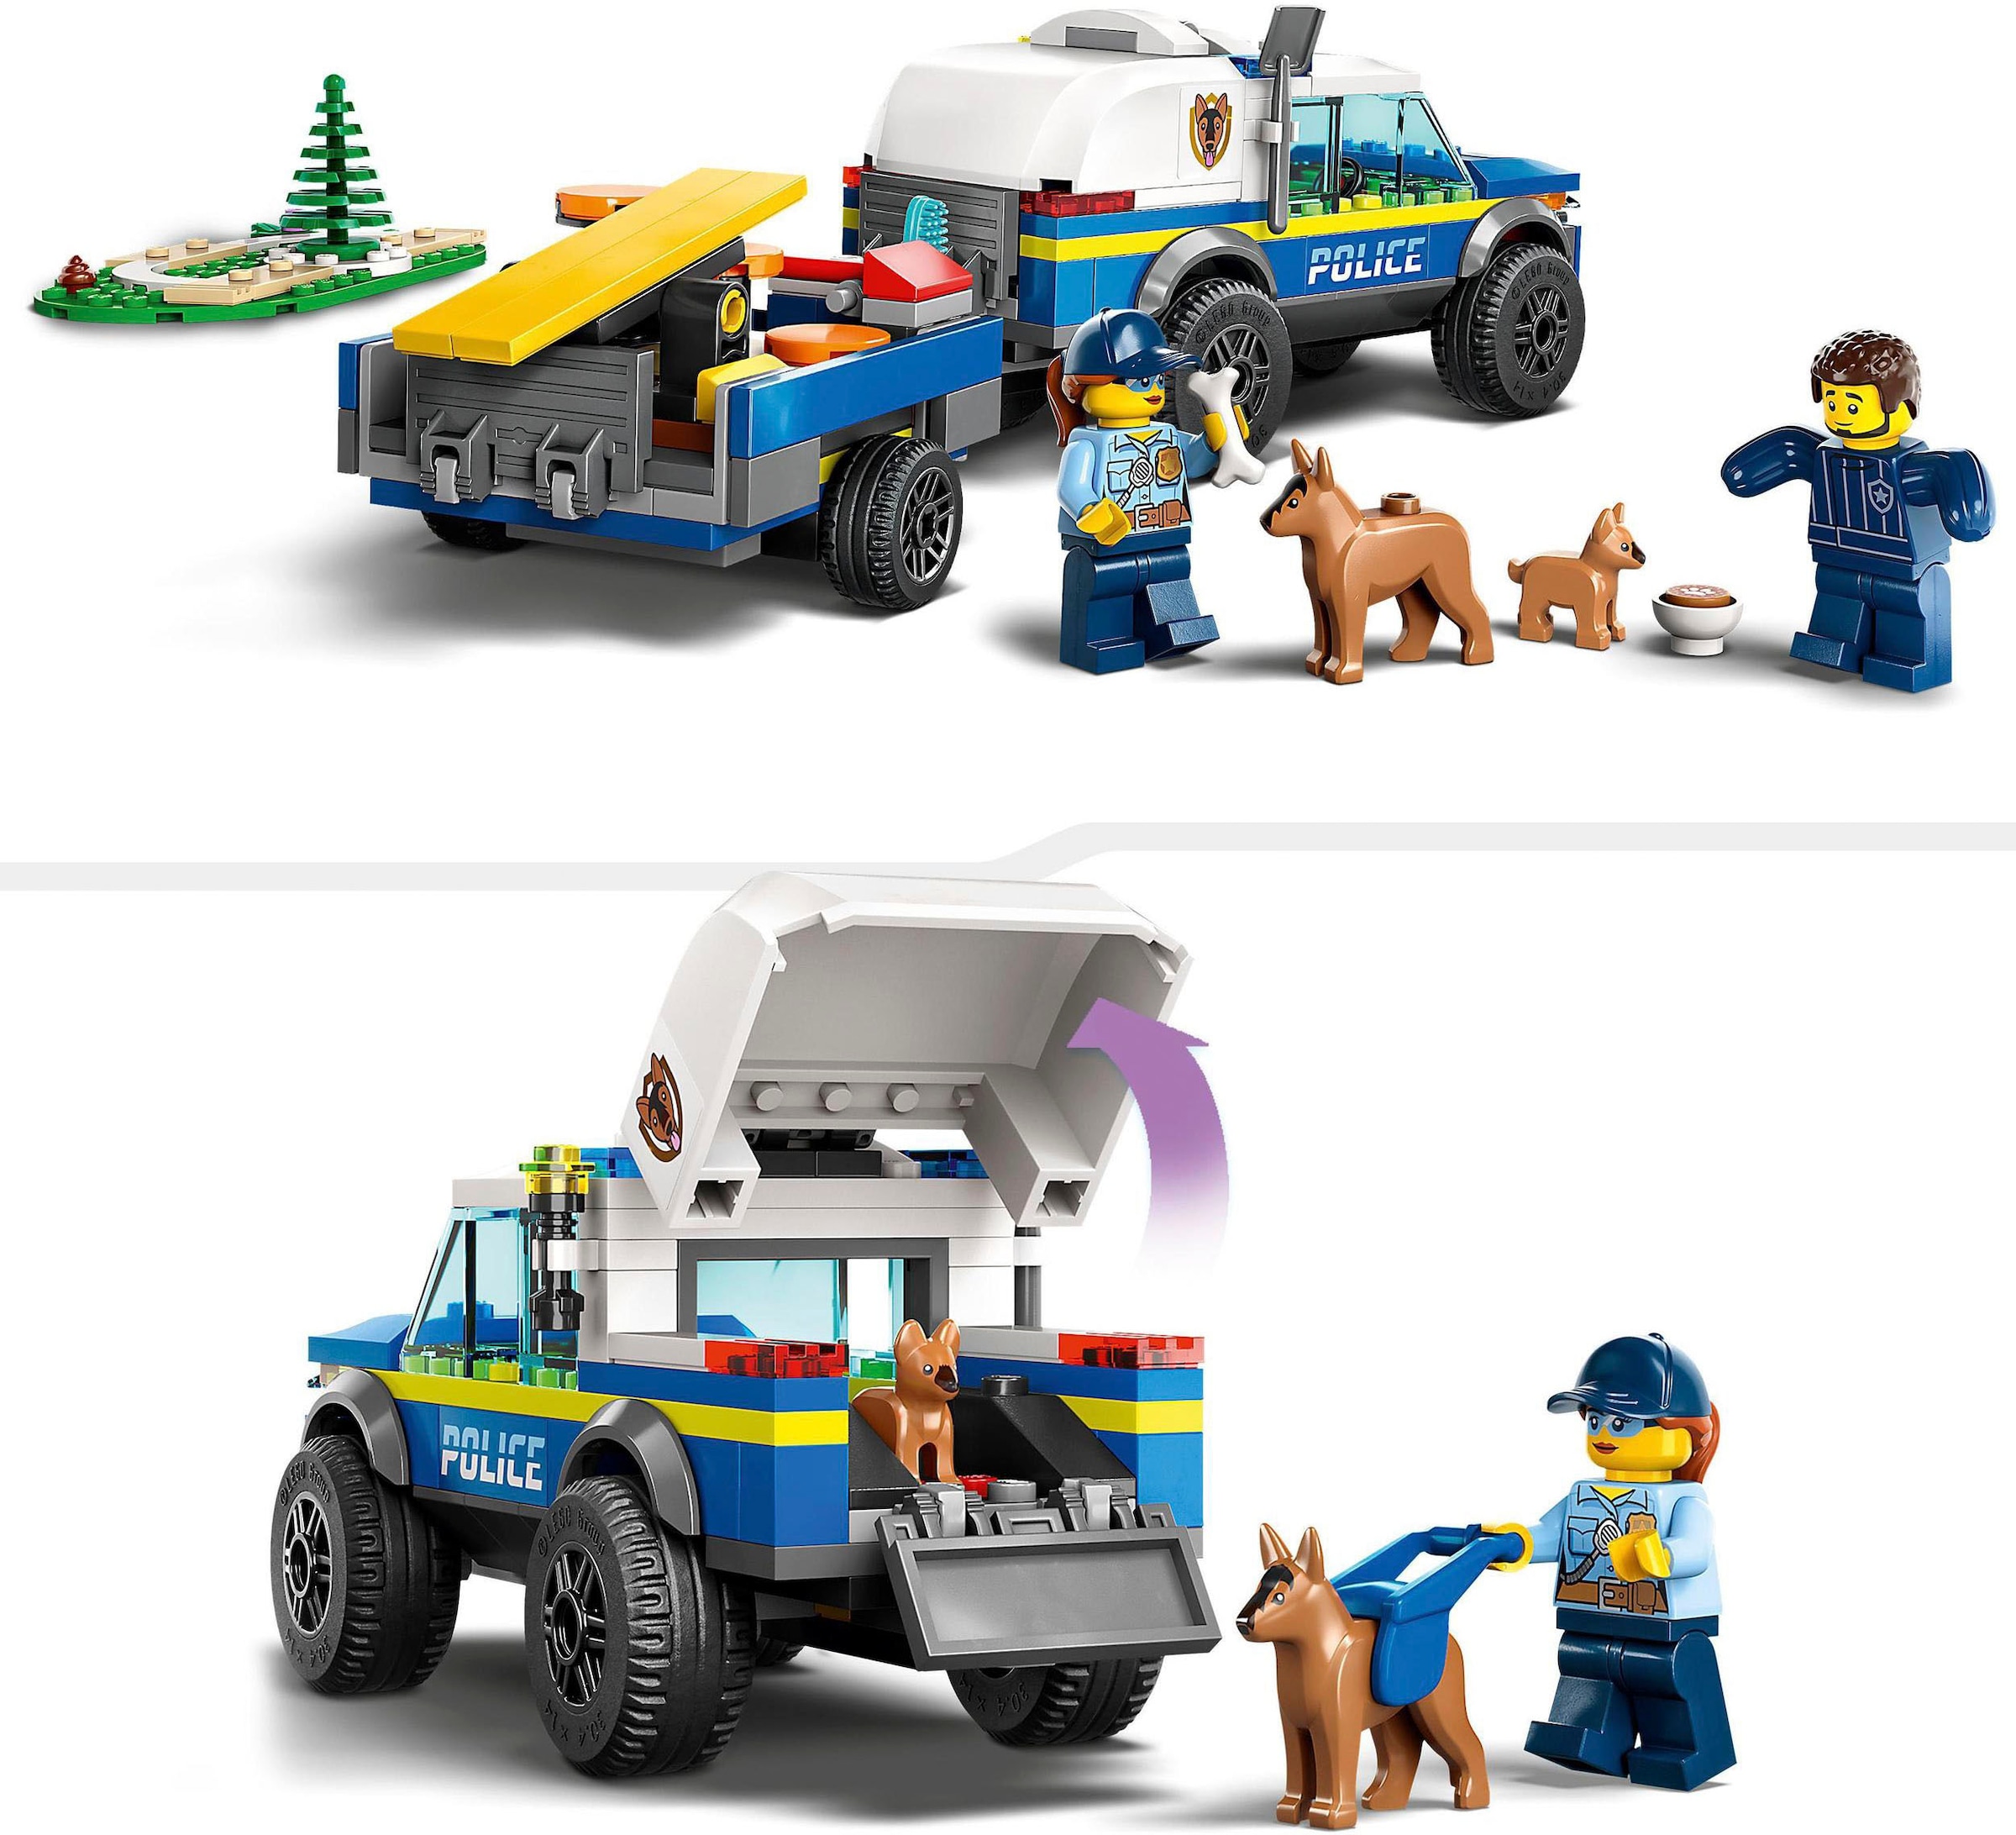 LEGO® Konstruktionsspielsteine »Mobiles Polizeihunde-Training (60369), LEGO® City«, (197 St.), Made in Europe